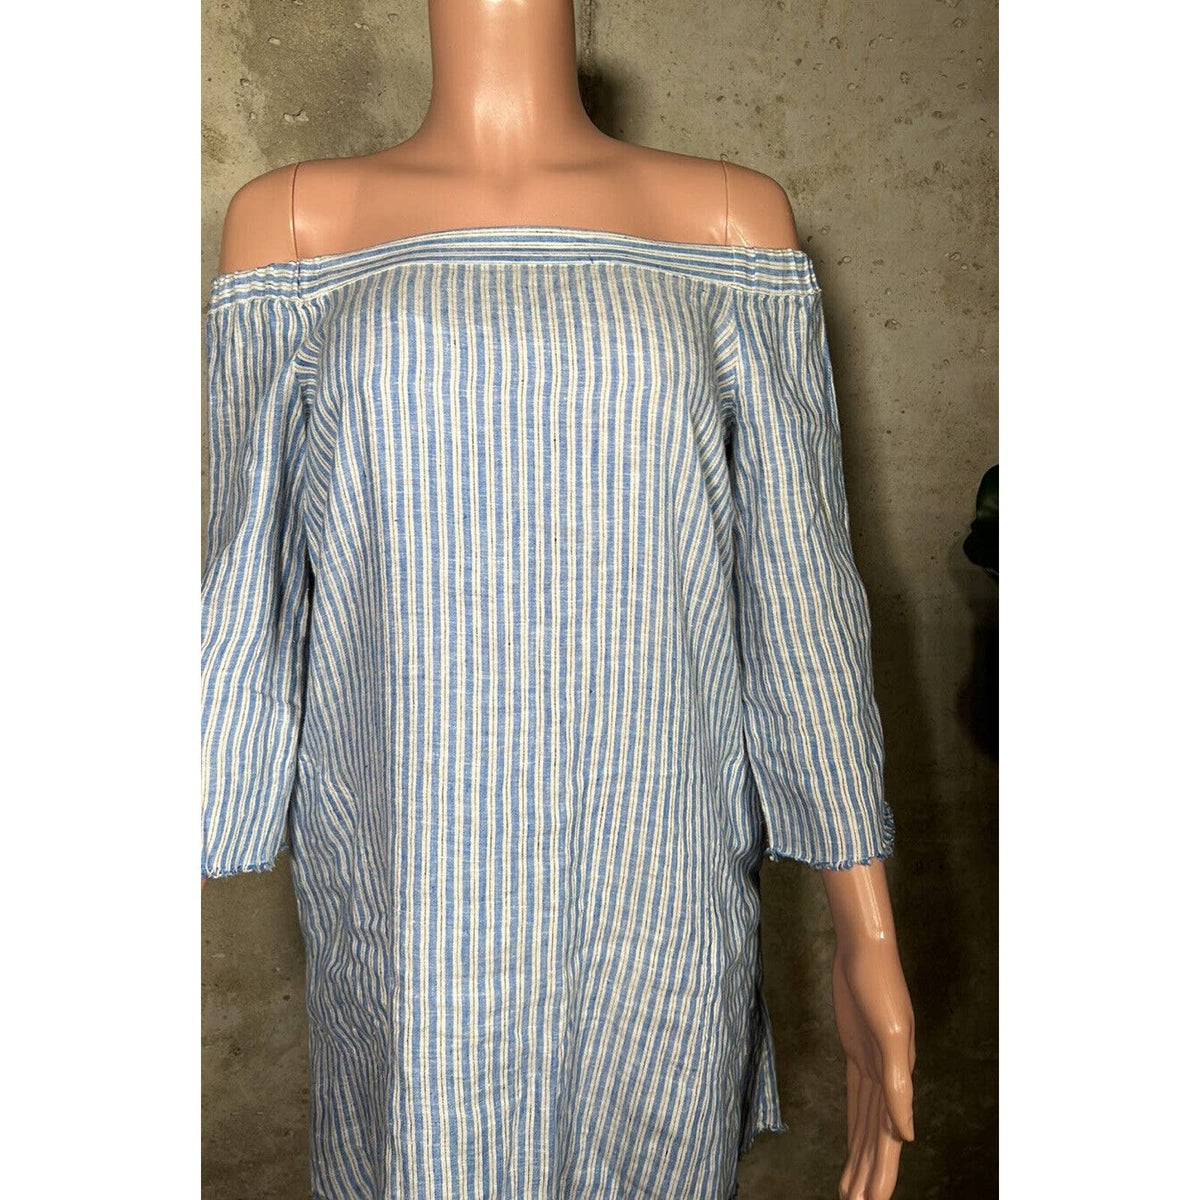 Tibi 100% Linen Blue Striped Dress Sz.2